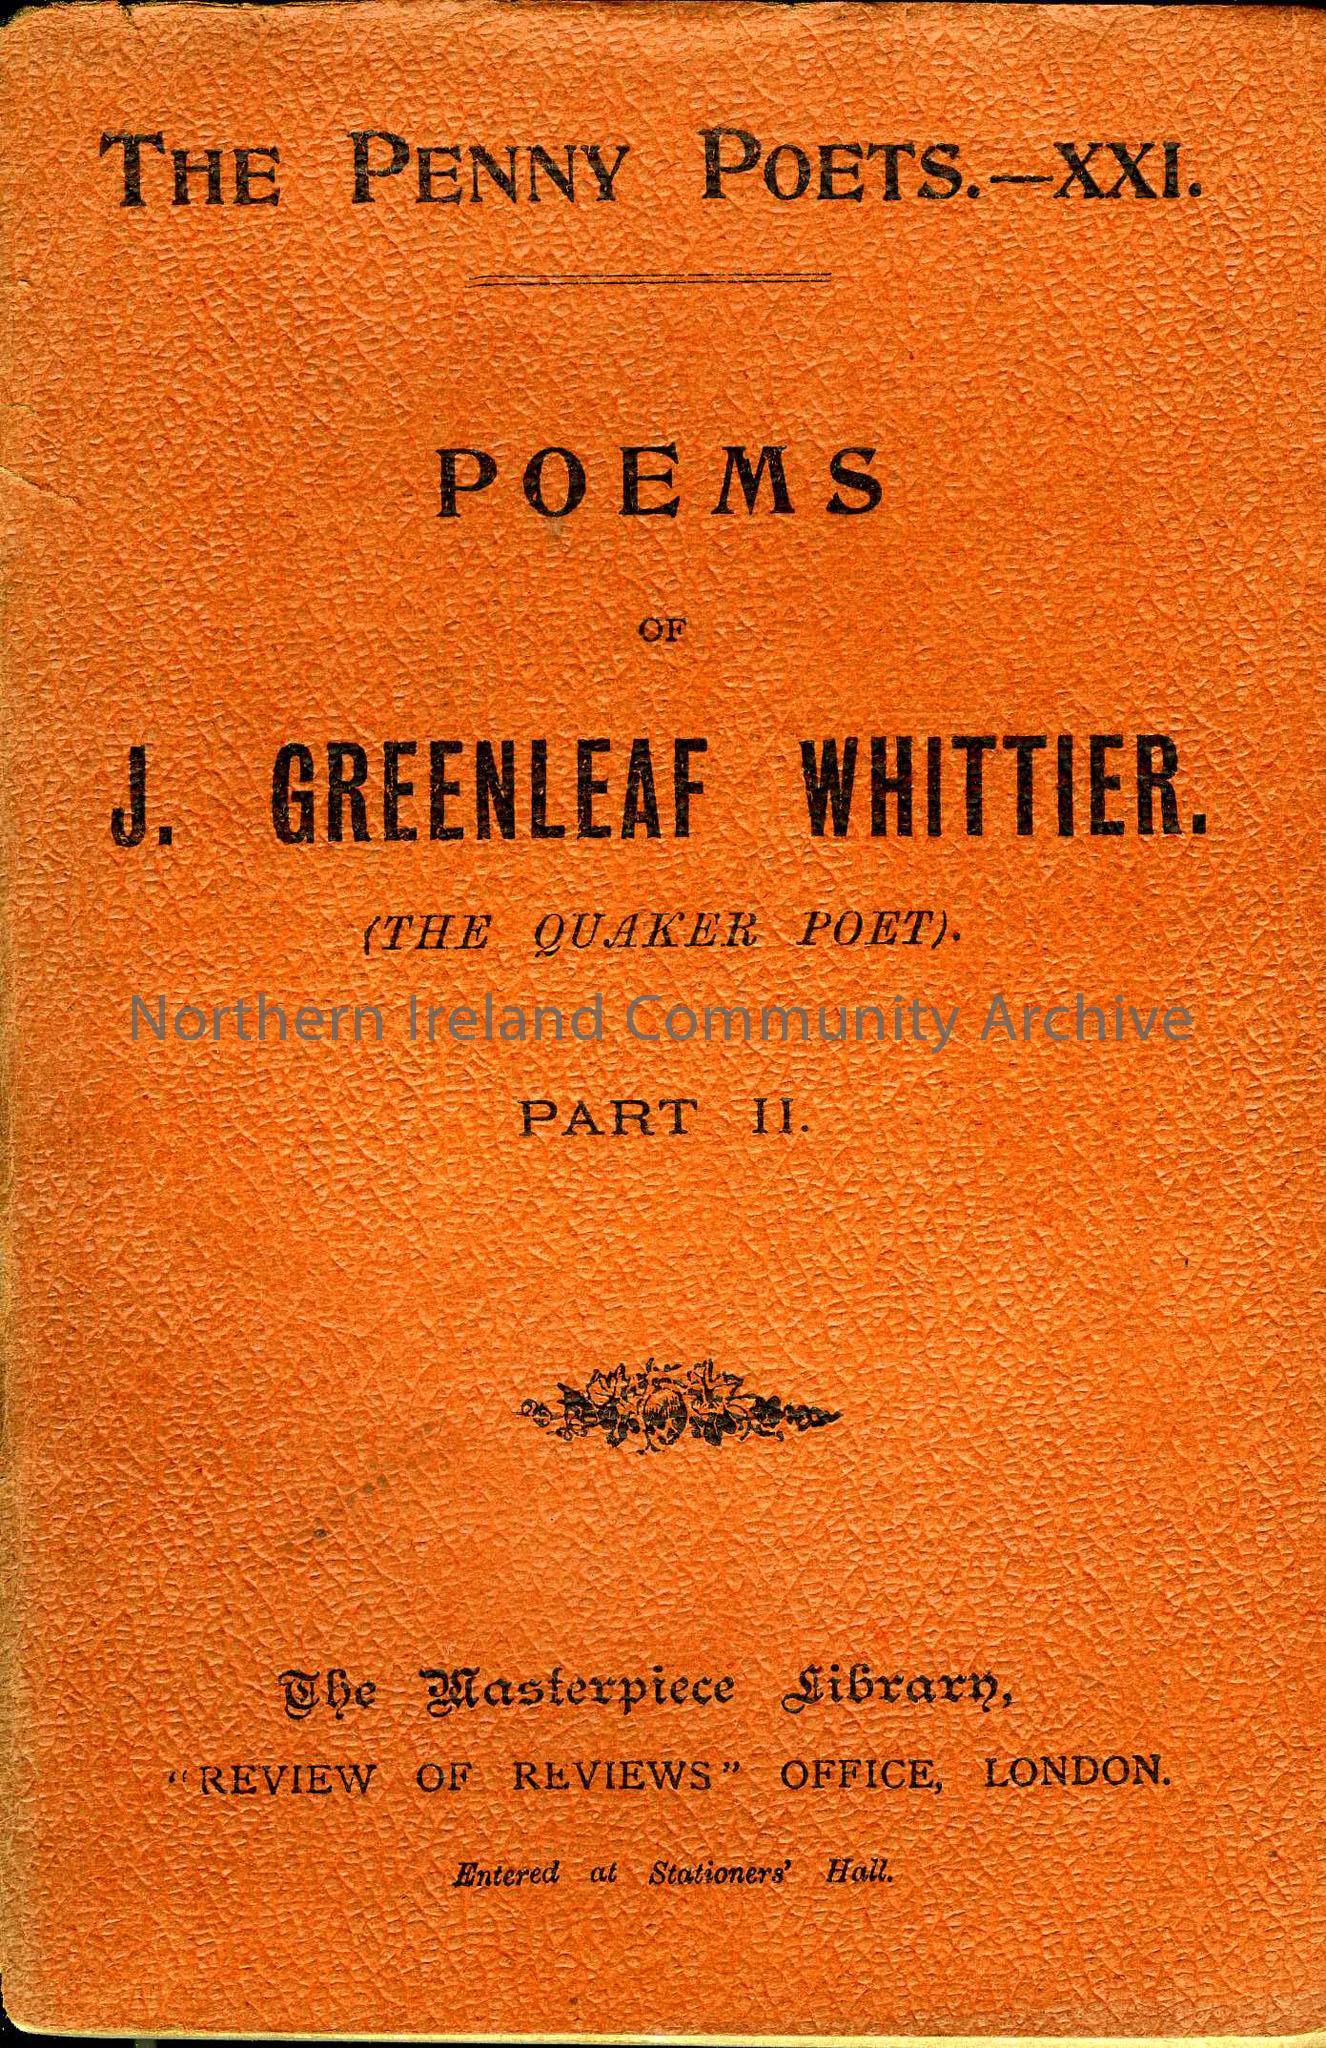 Poems of J Greenleaf Whittier, The Quaker Poet – Part II